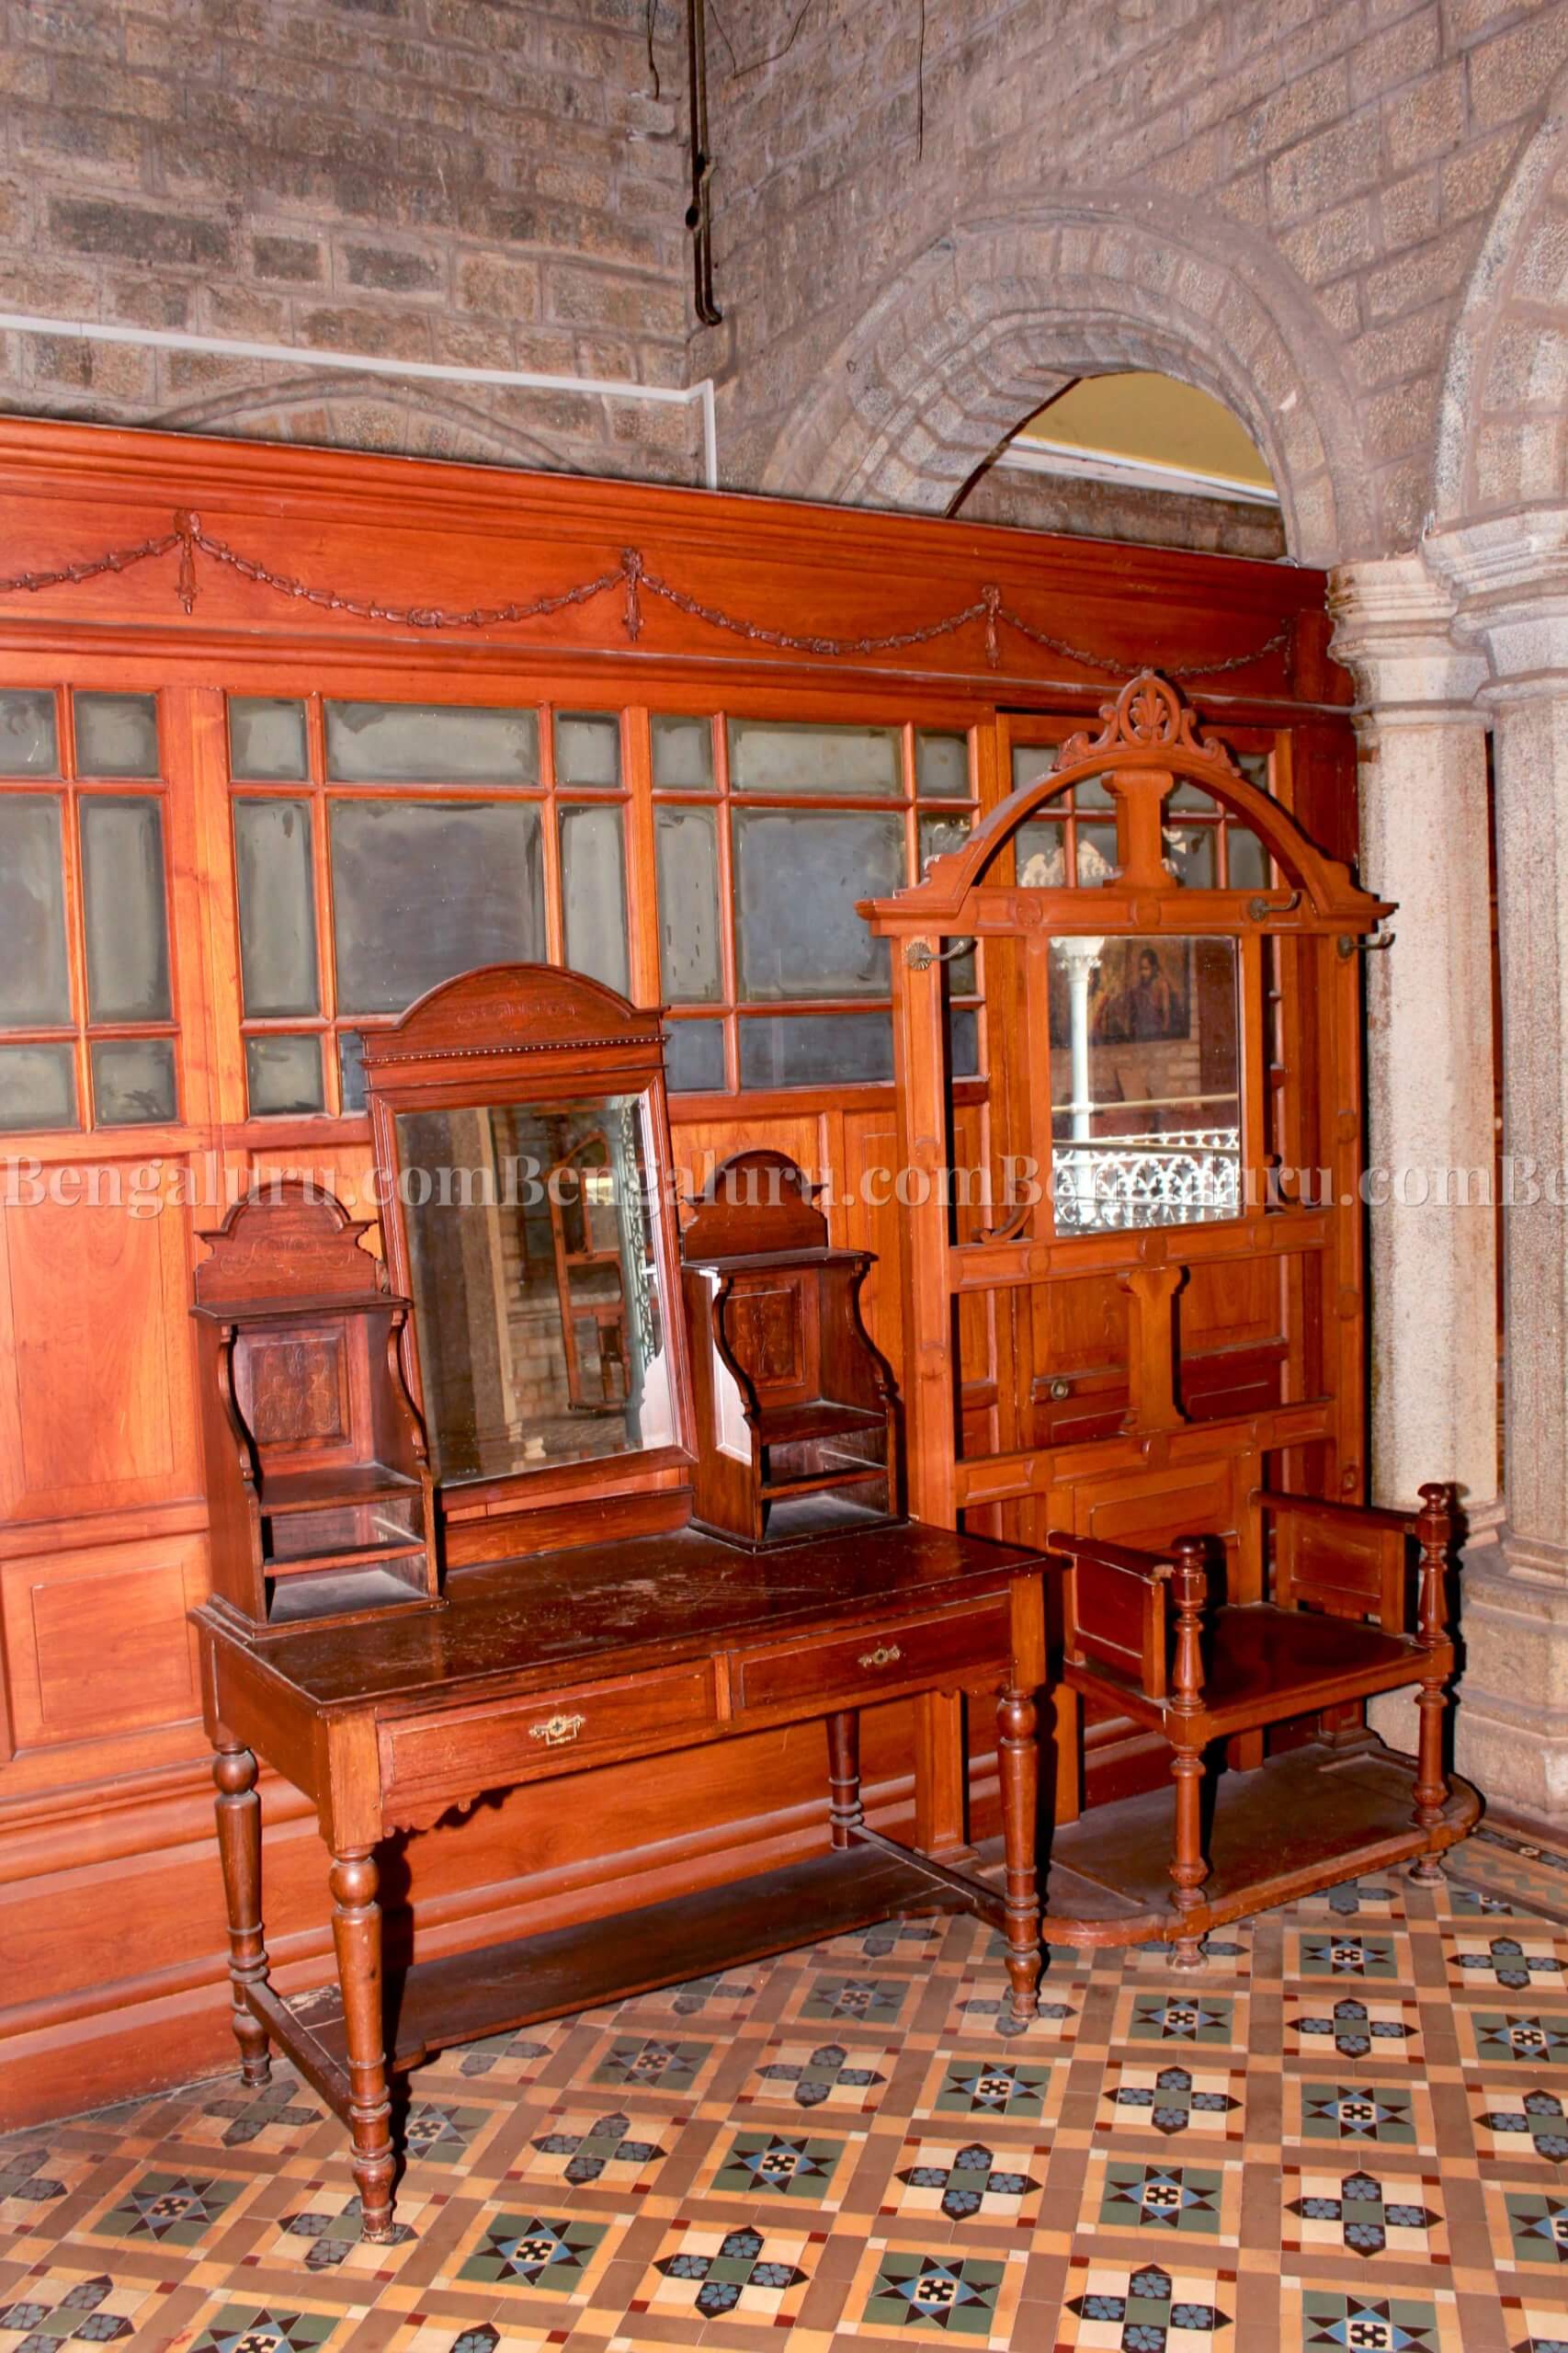 Bengaluru Palace - Wood furniture